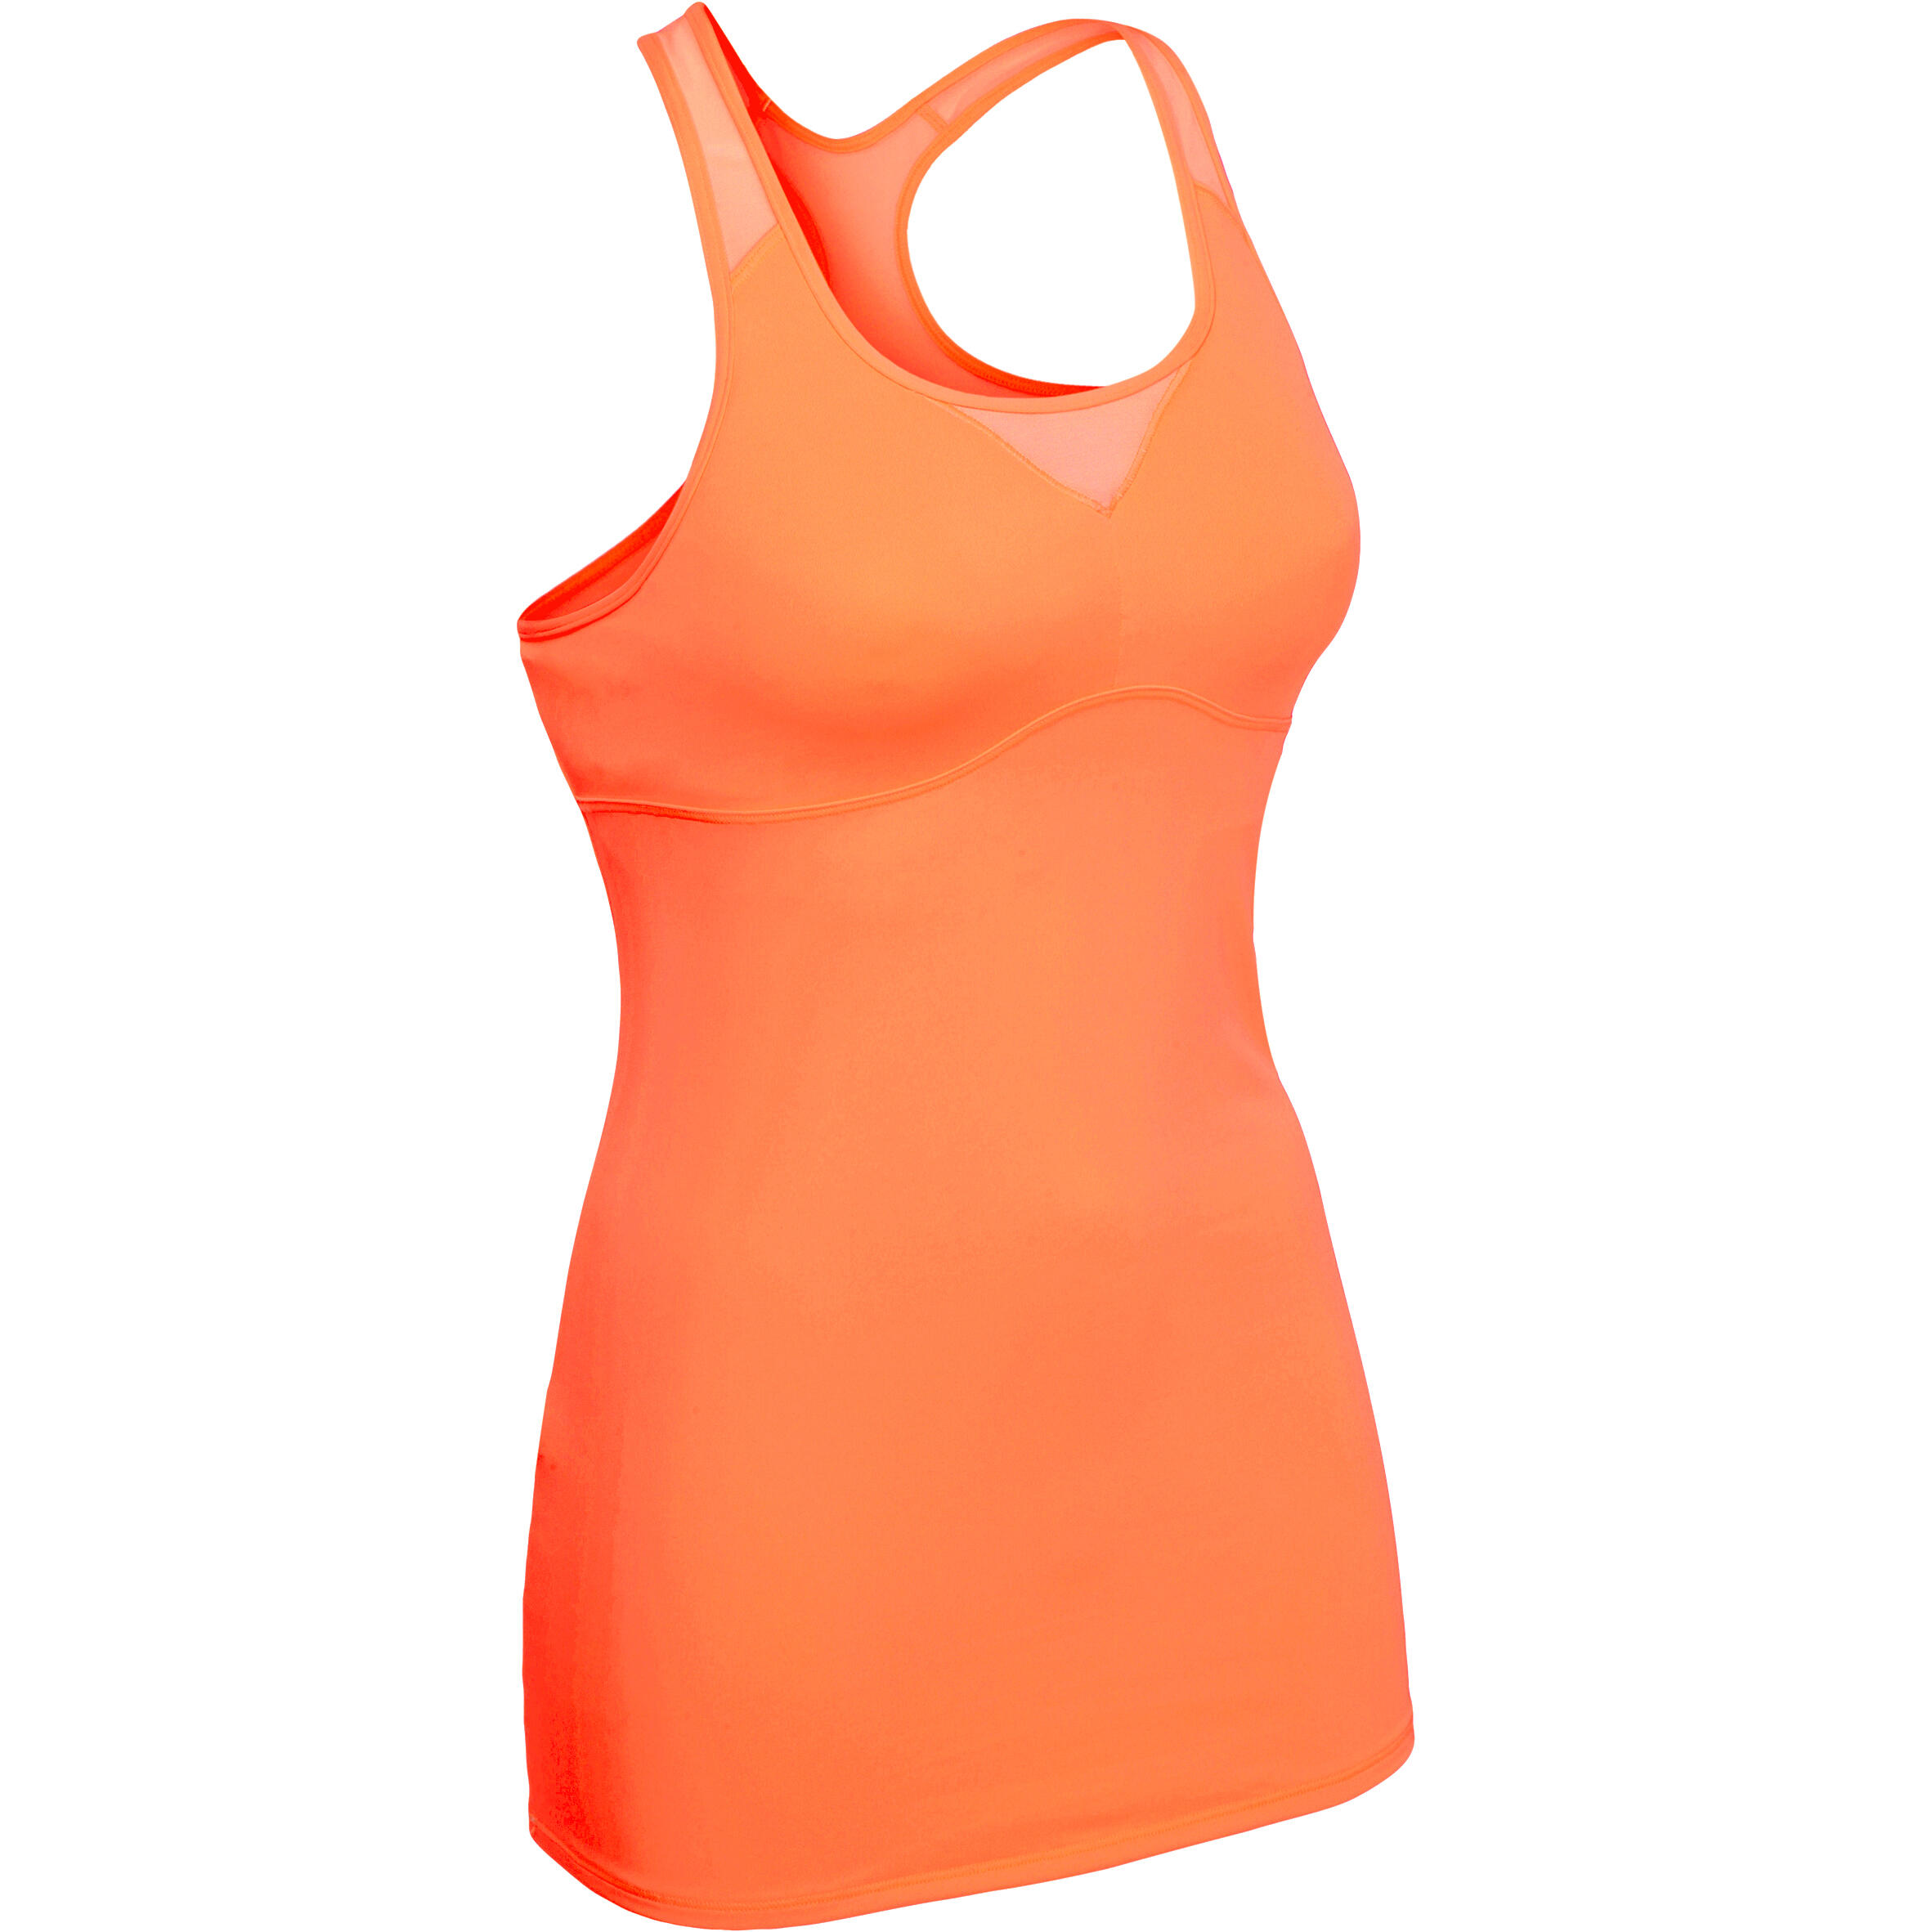 DOMYOS Breathe Women's Fitness Tank Top with Built-in Bra - Neon Orange